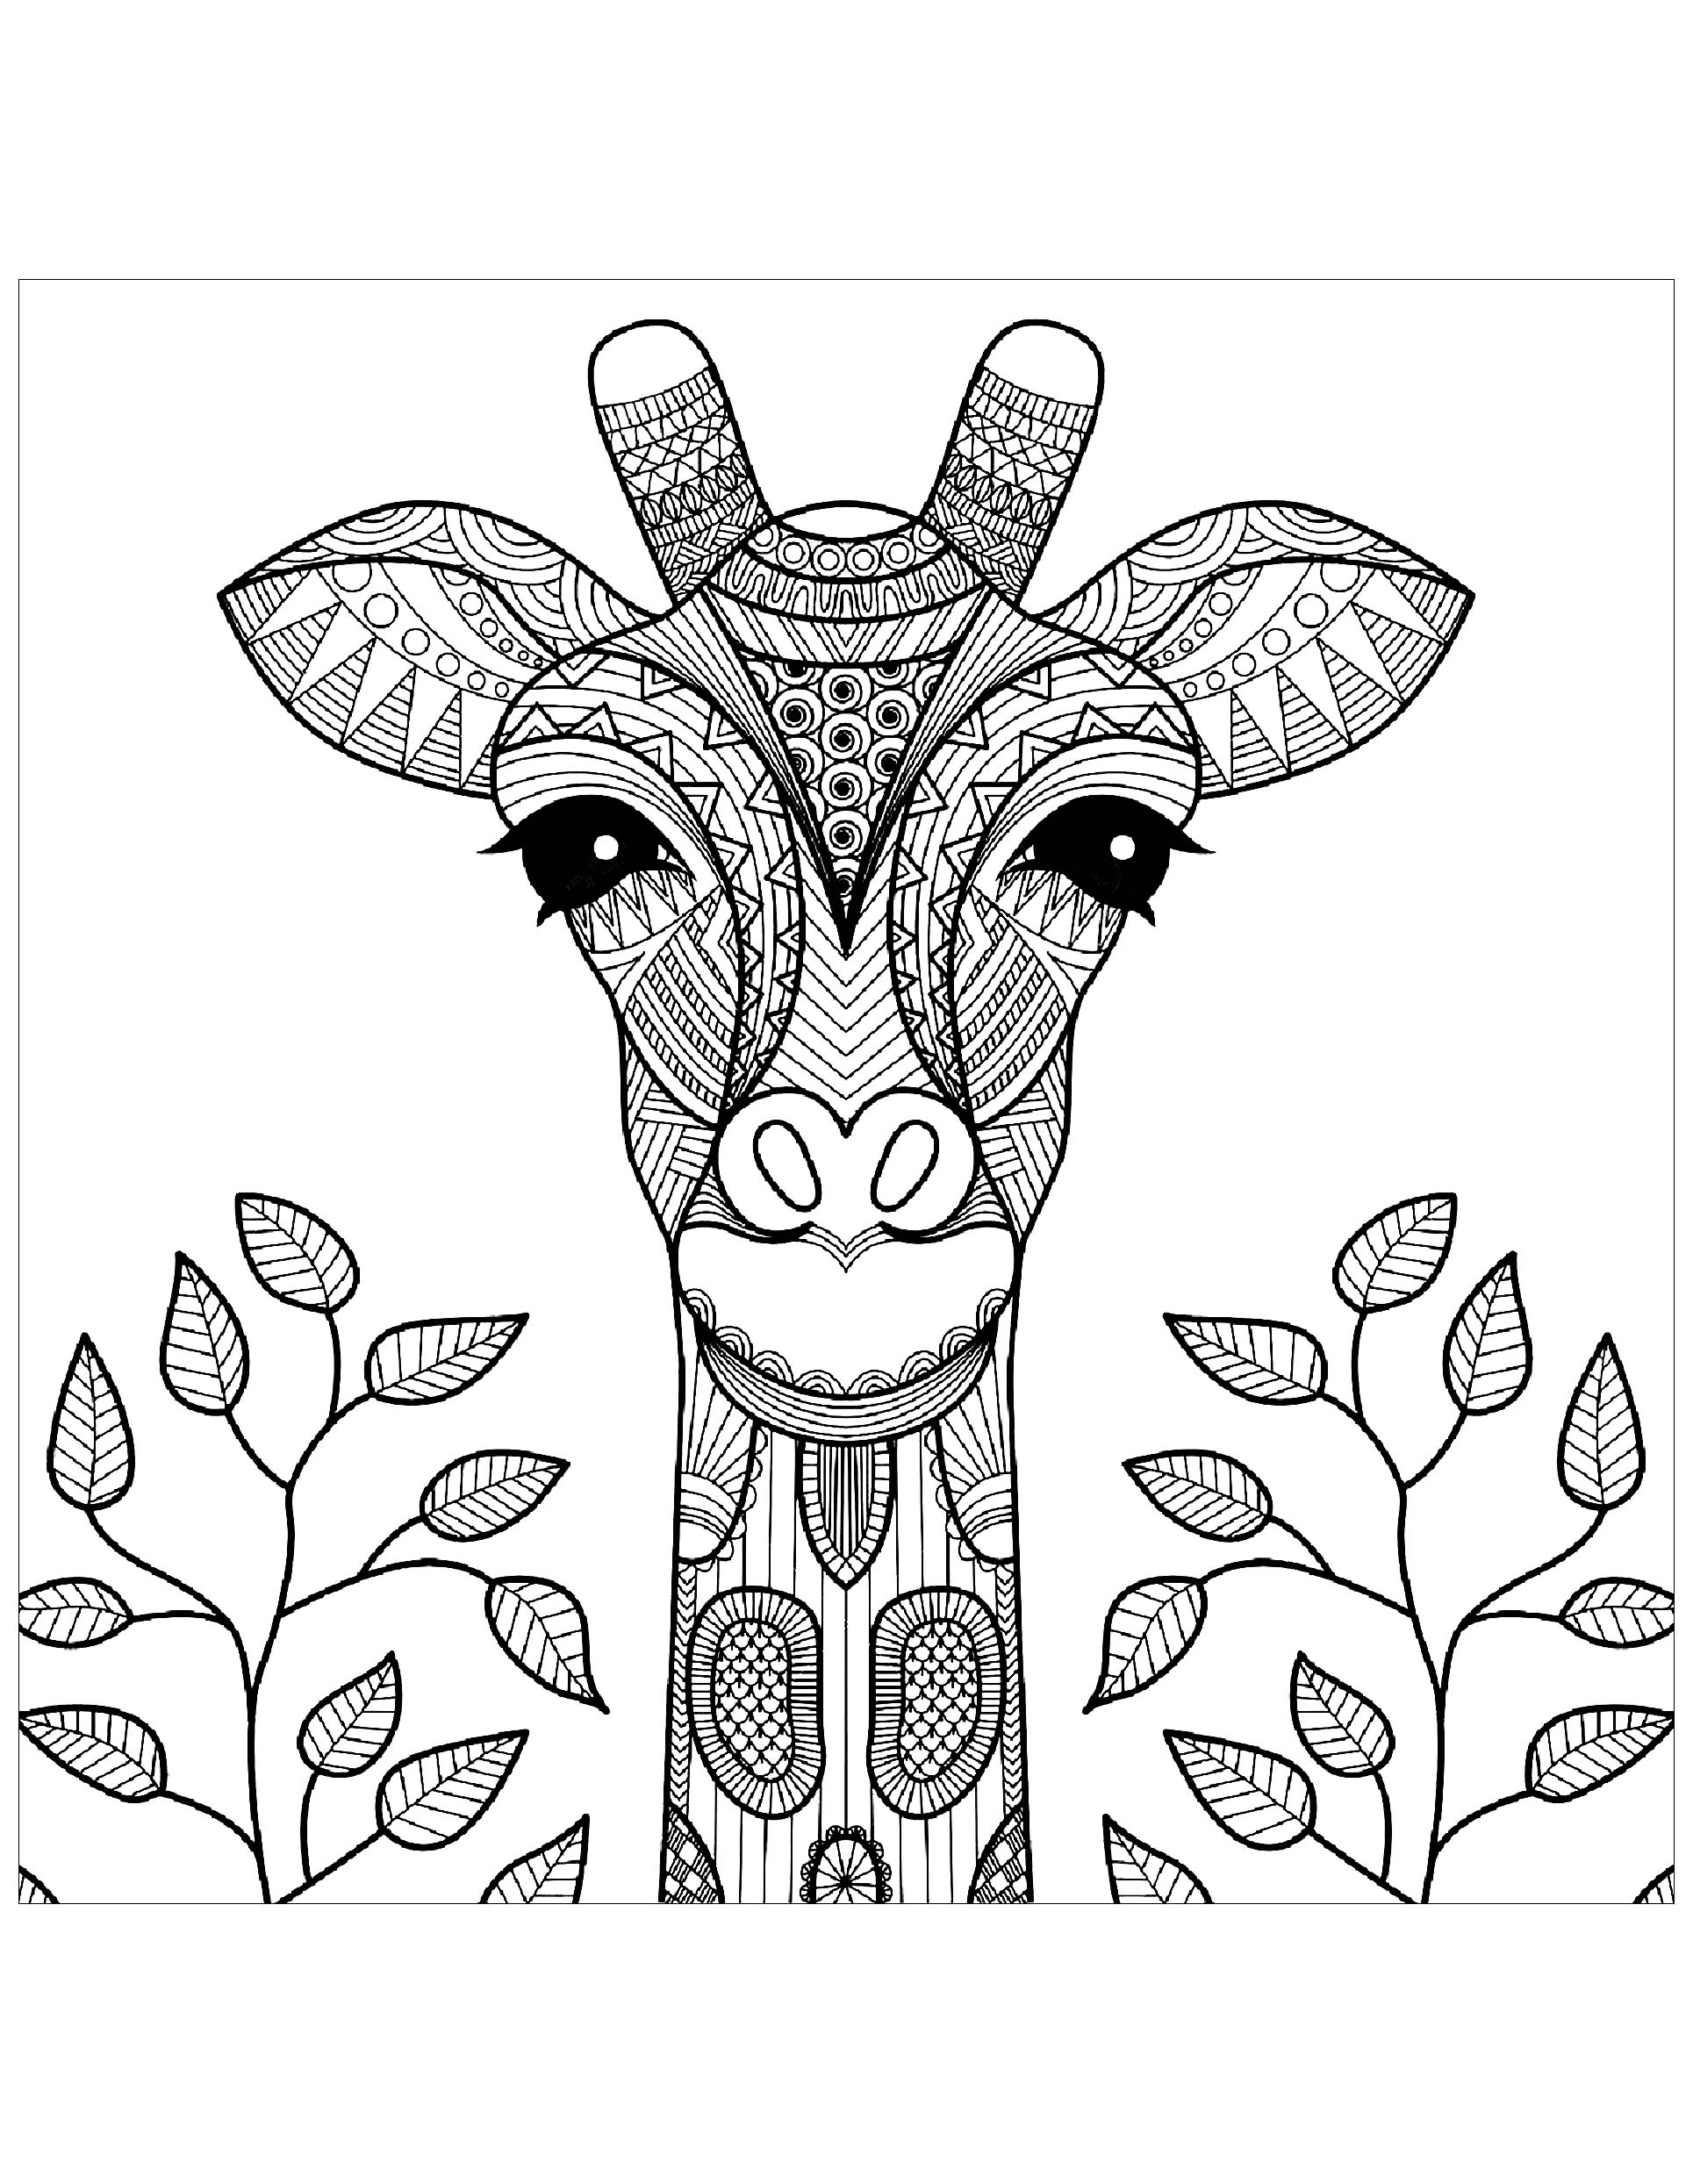 Disegni da colorare per adulti : Giraffe - 1, Artista : Bimdeedee   Fonte : 123rf